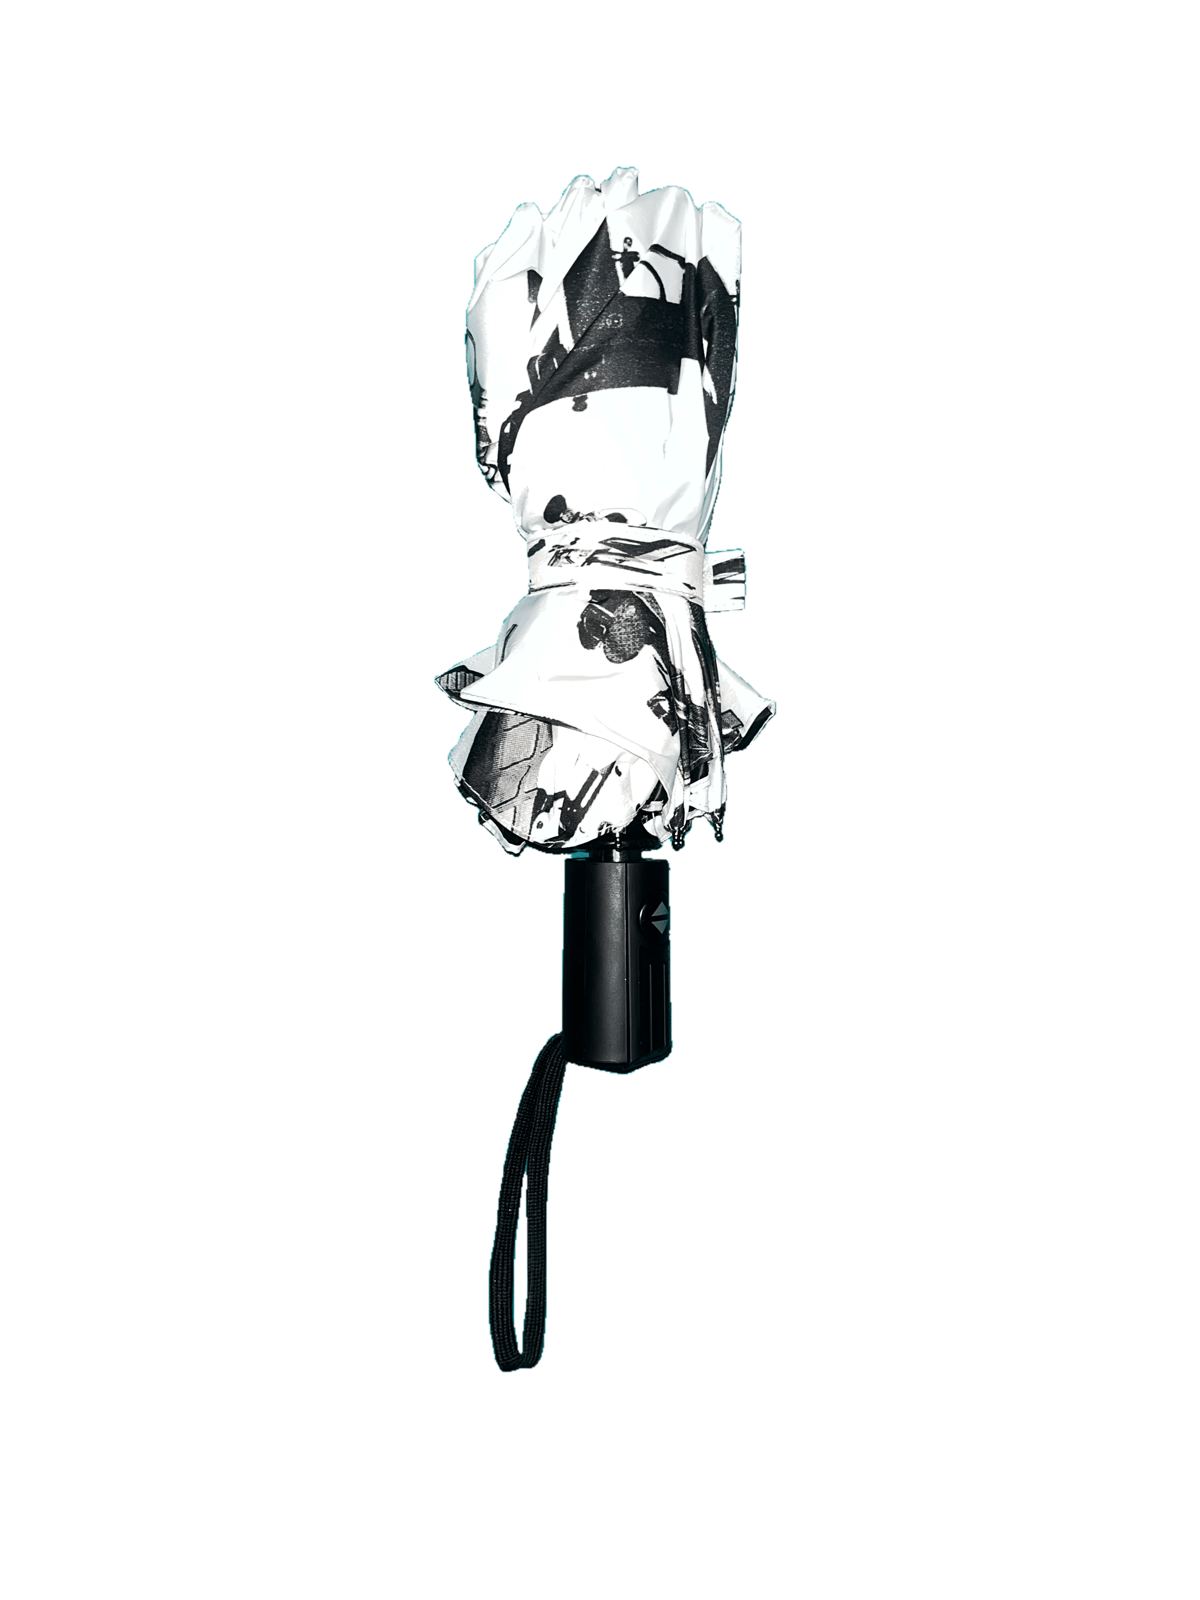 Image of Hot Lead Gunbrella